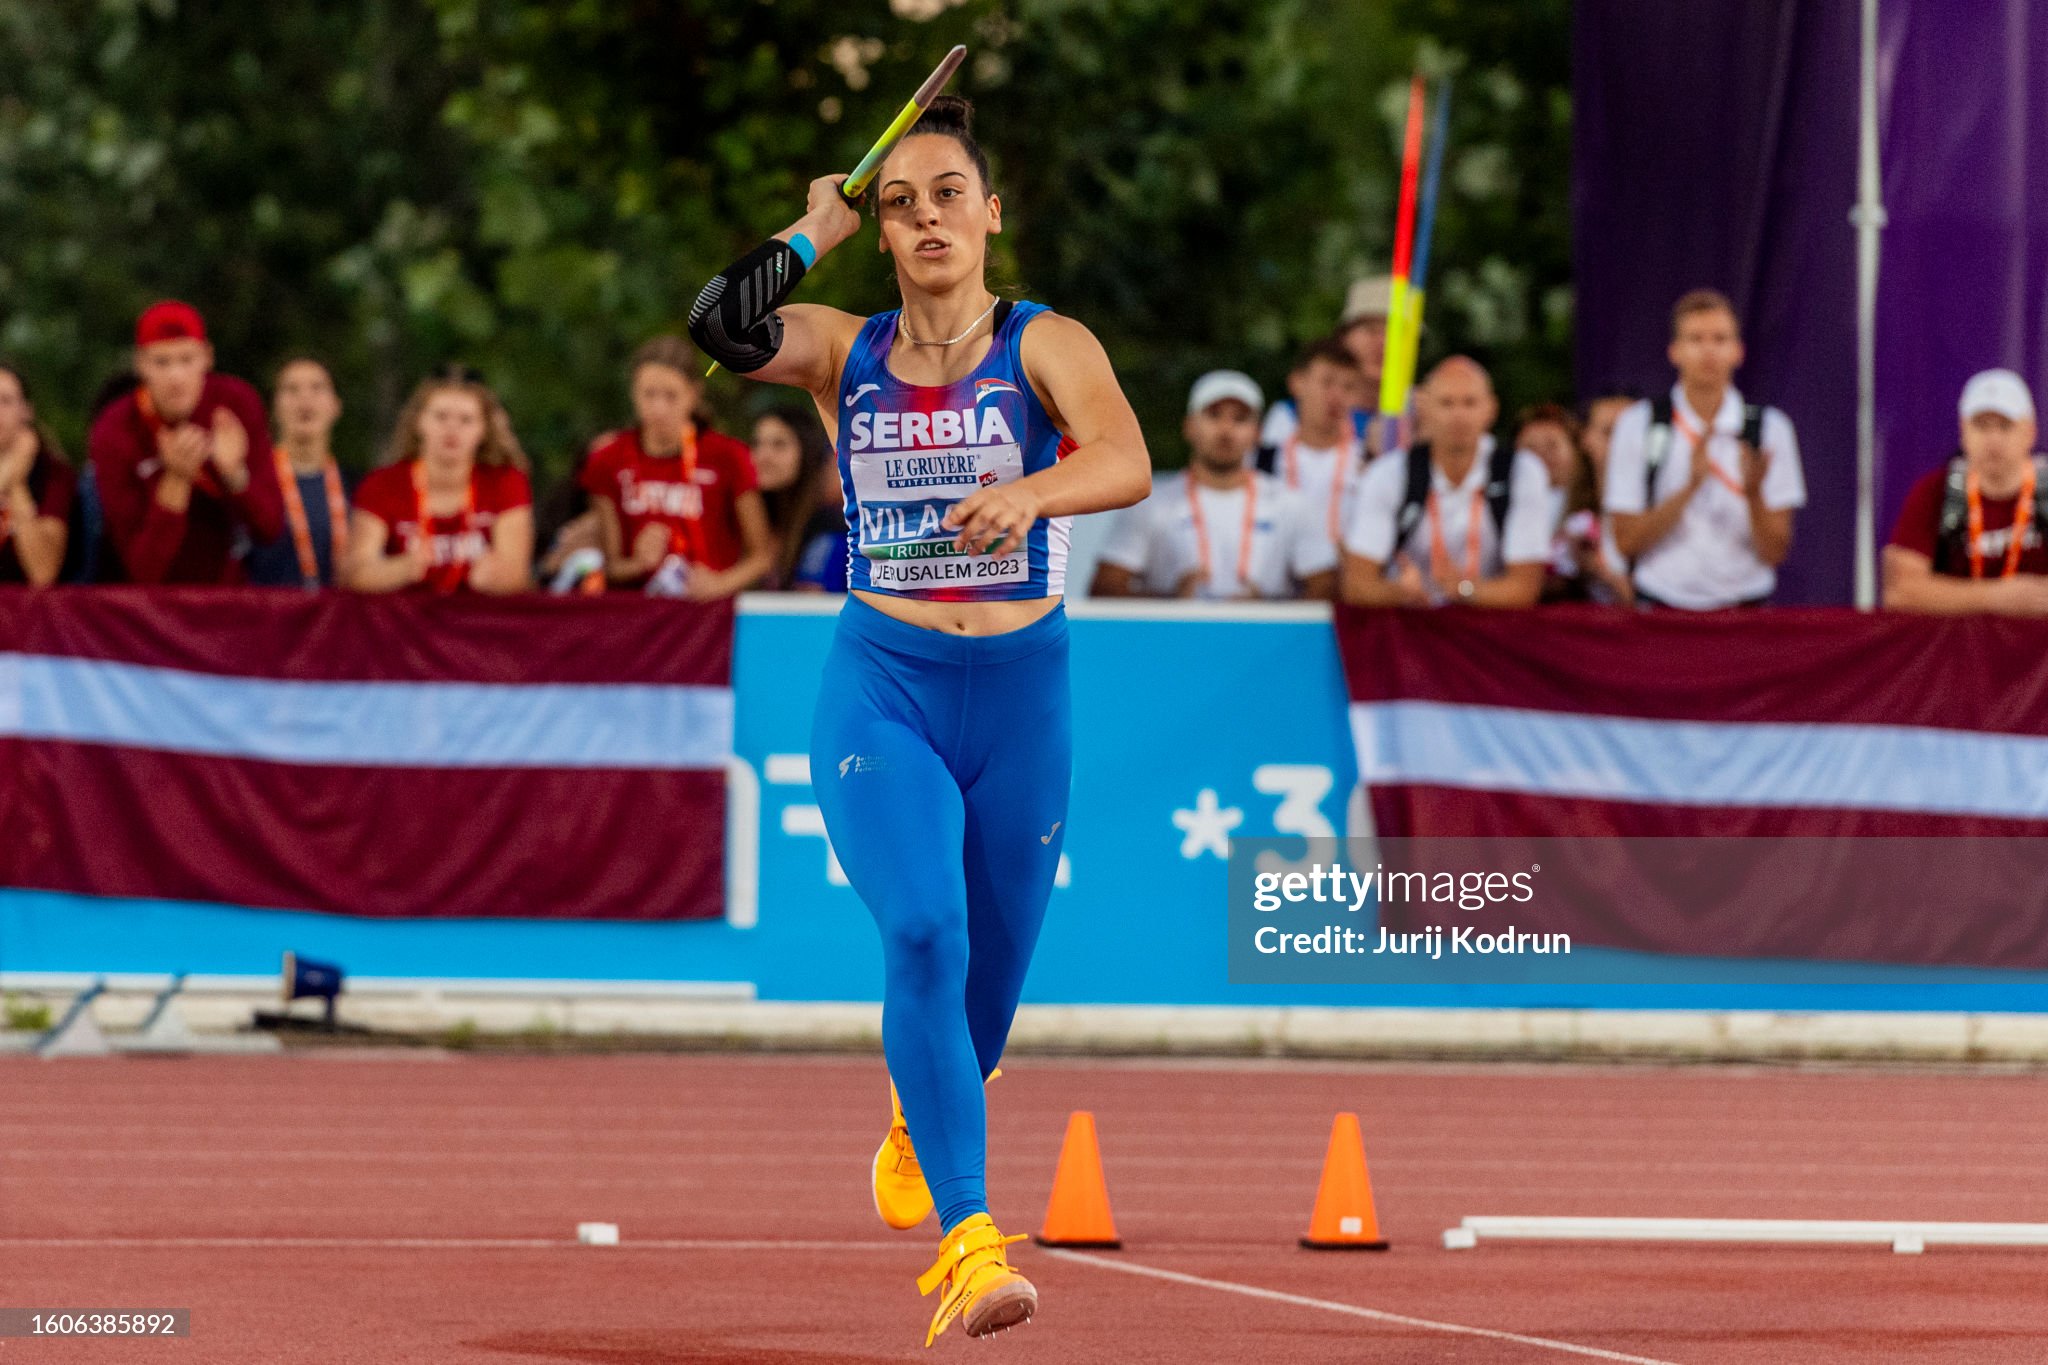 U20 Evropsko prvenstvo, Jerusalim 2023 - 10. avgust - Adriana Vilagoš, bacanje koplja;   Foto: Jurij Kodrun/Getty Images for European Athletics